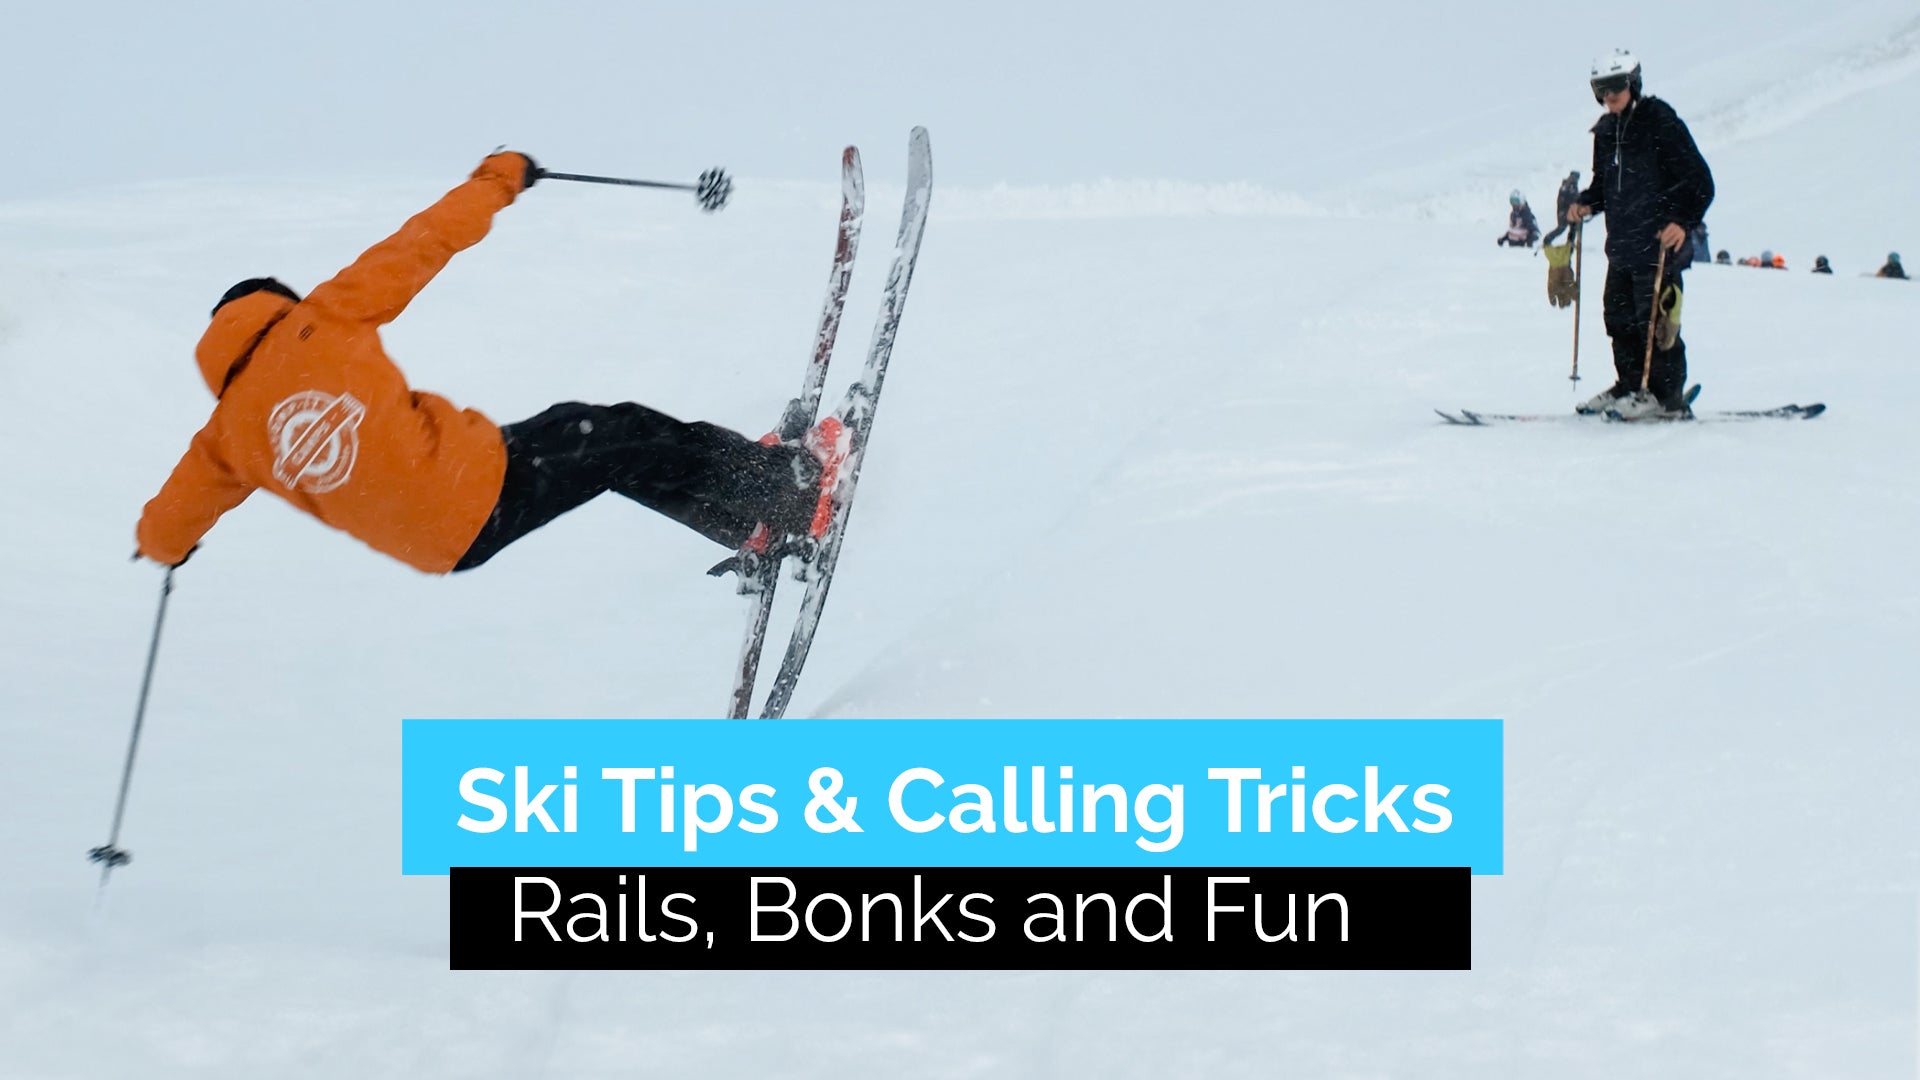 Rails, Bonks and Fun Ski Tricks  | Ski Tips & Calling Tricks